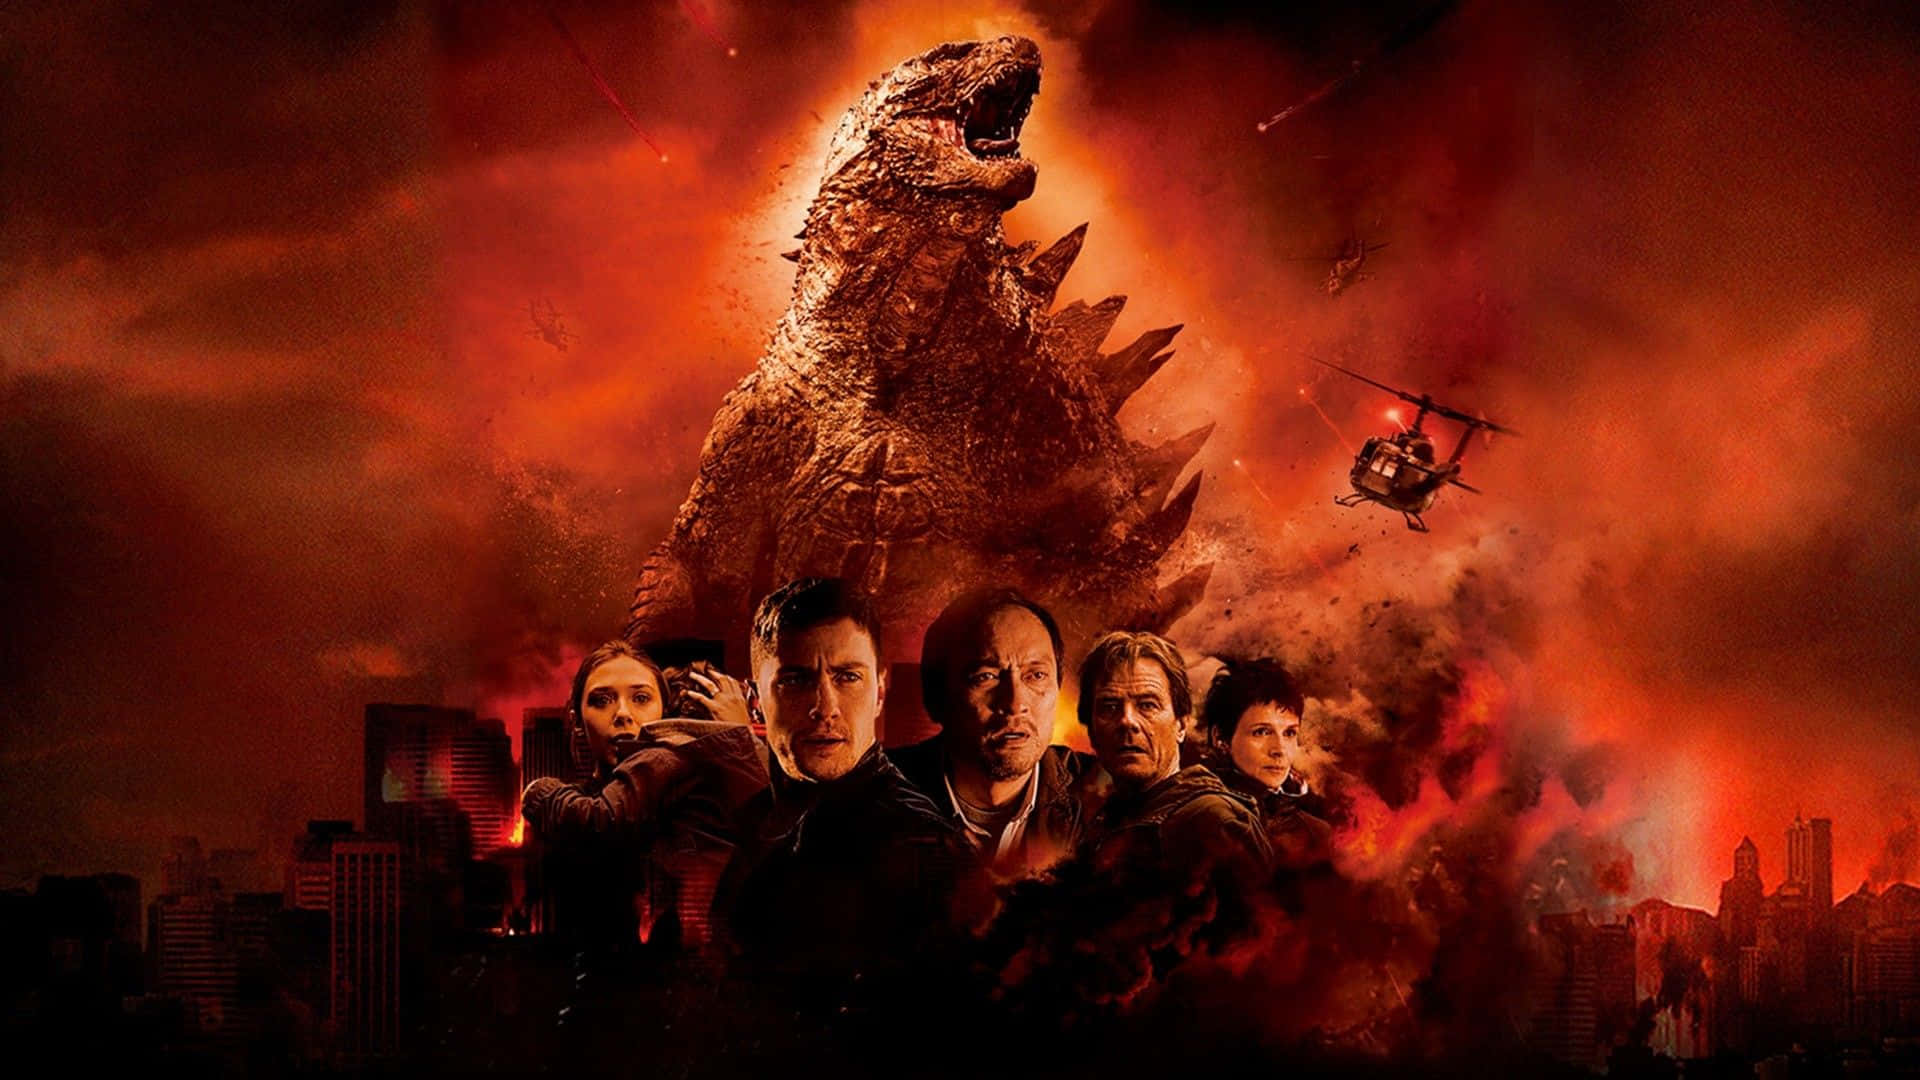 Cool Godzilla Movie Poster Wallpaper